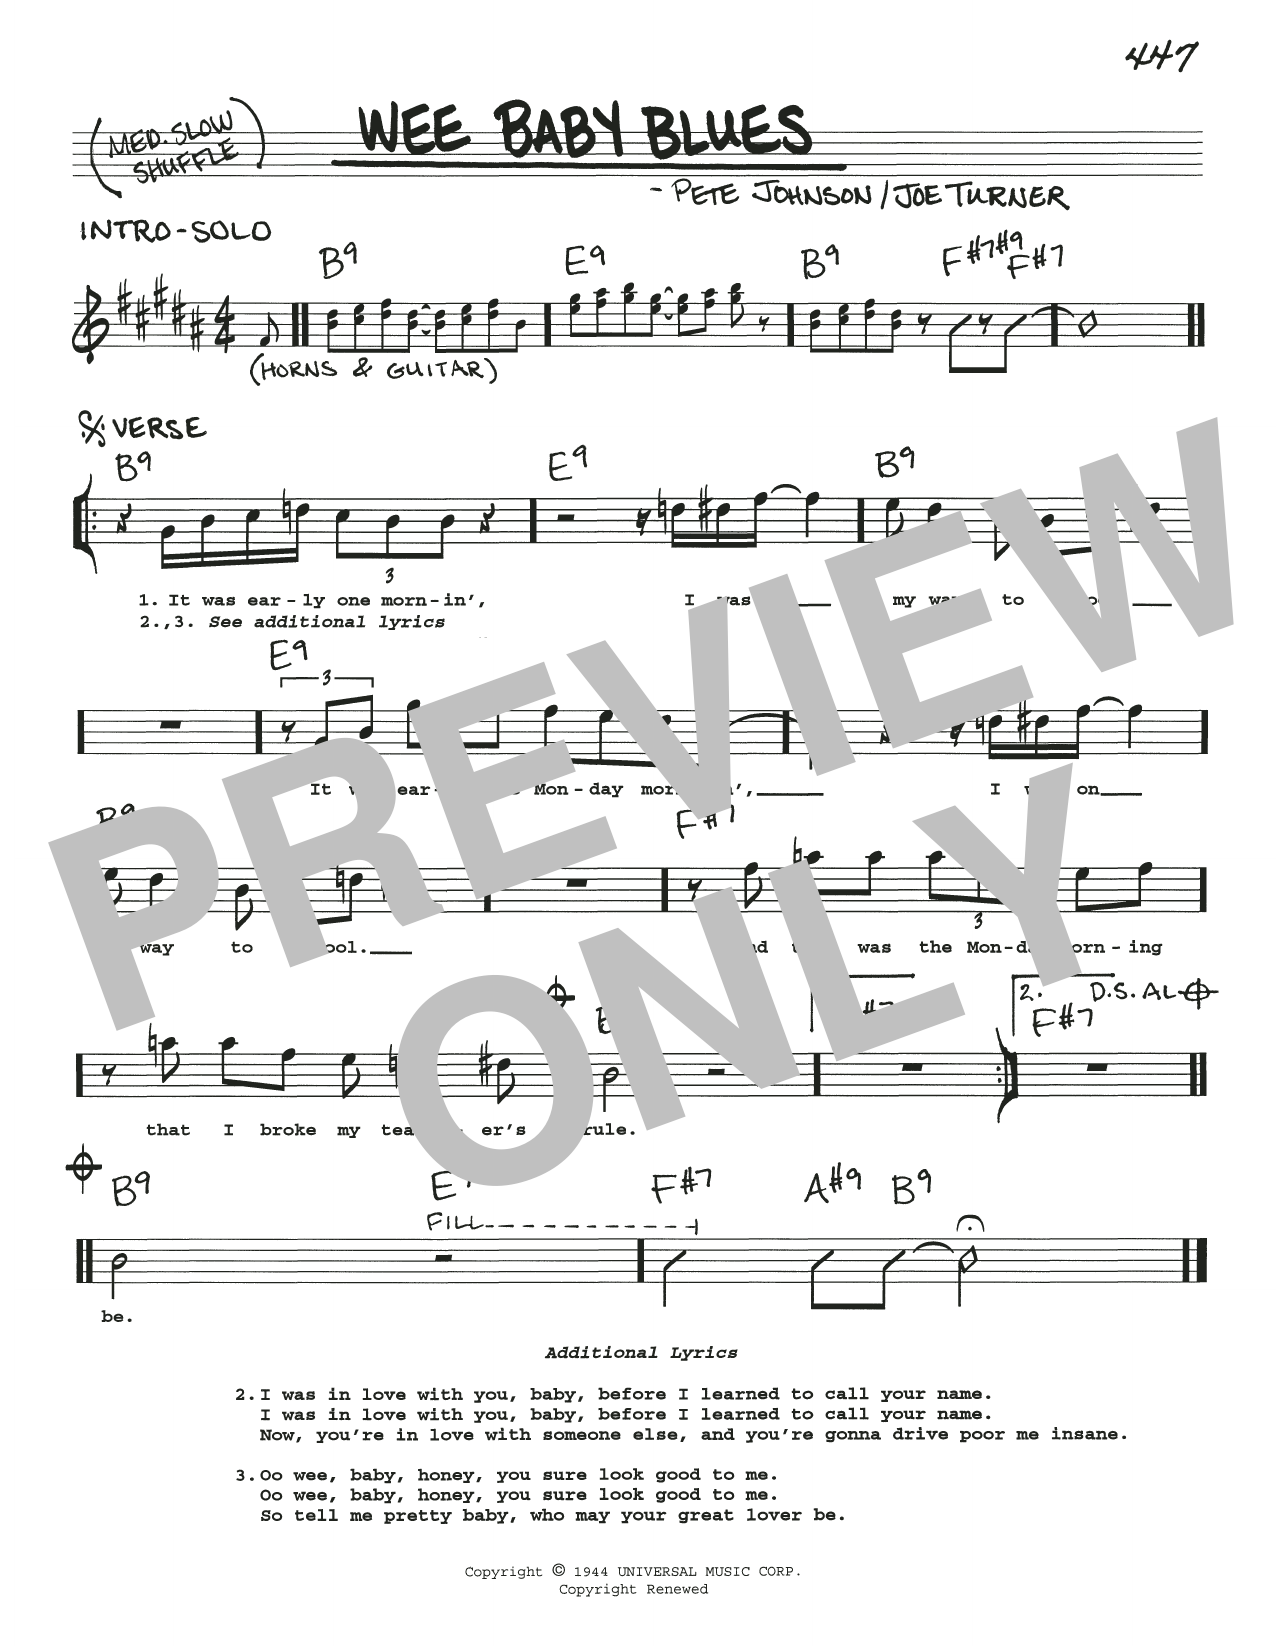 Joe Turner Wee Baby Blues Sheet Music Notes & Chords for Real Book – Melody, Lyrics & Chords - Download or Print PDF